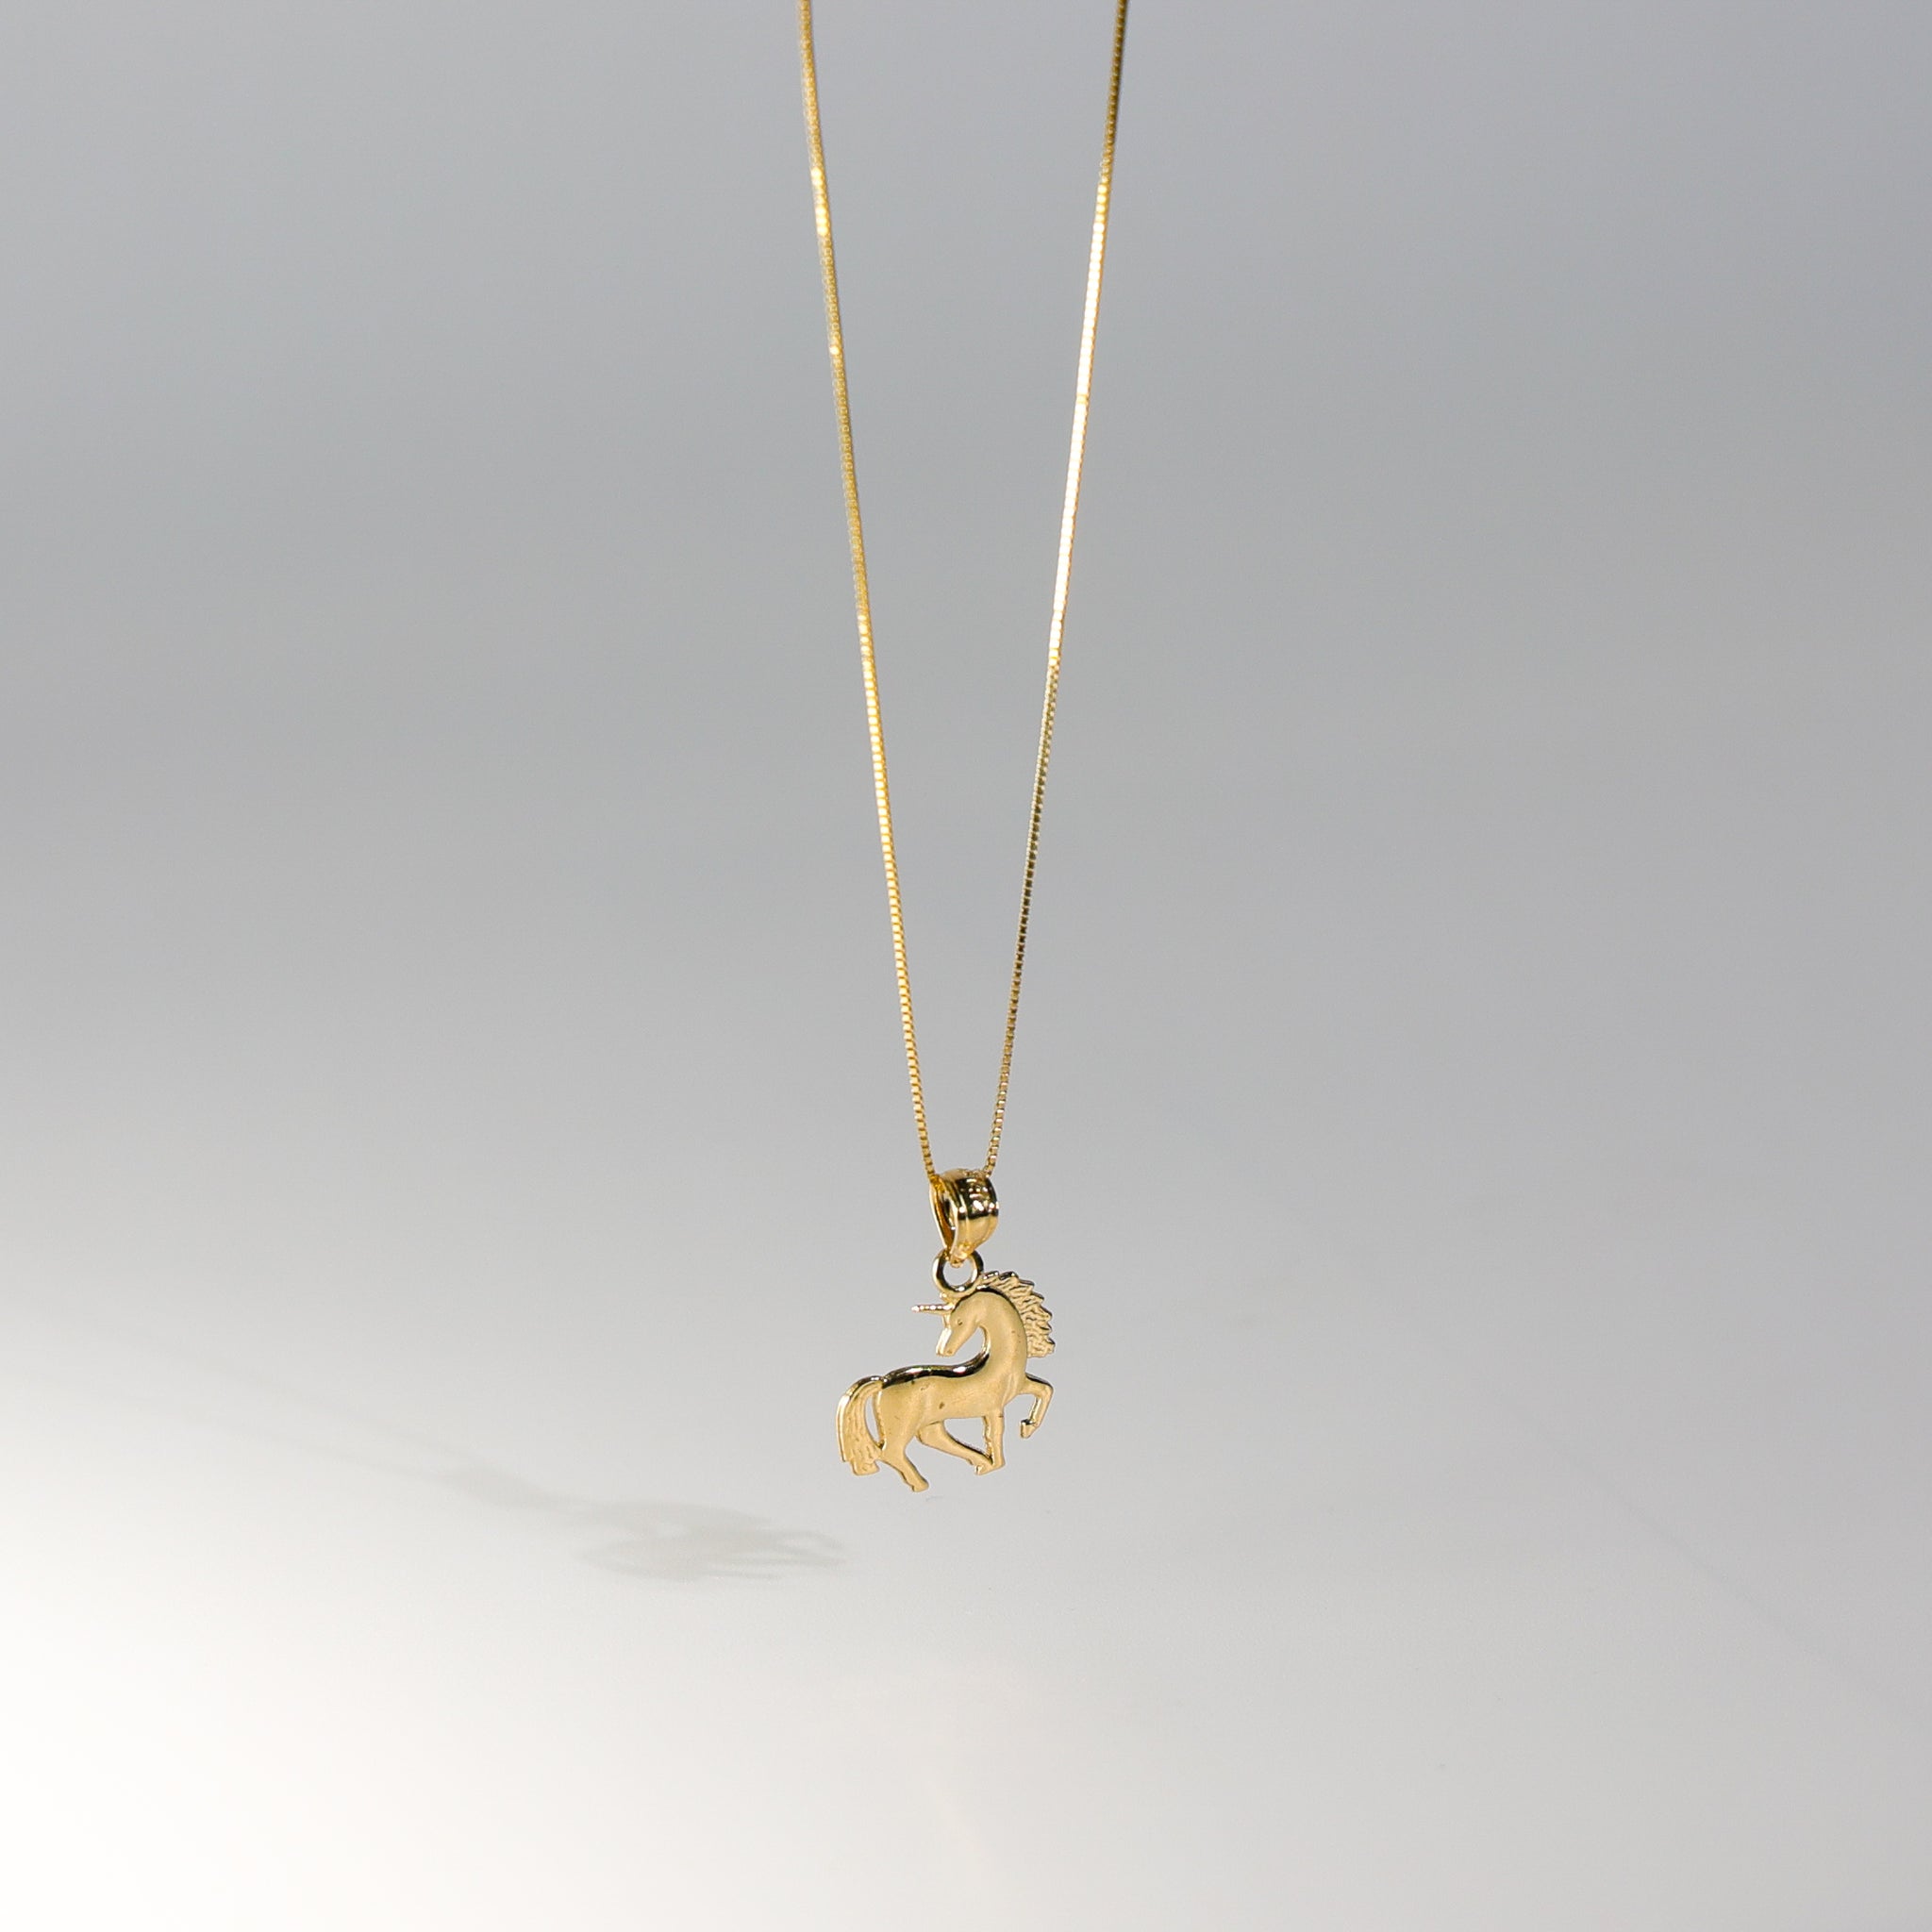 Gold Tiny Unicorn Pendant Model-1651 - Charlie & Co. Jewelry